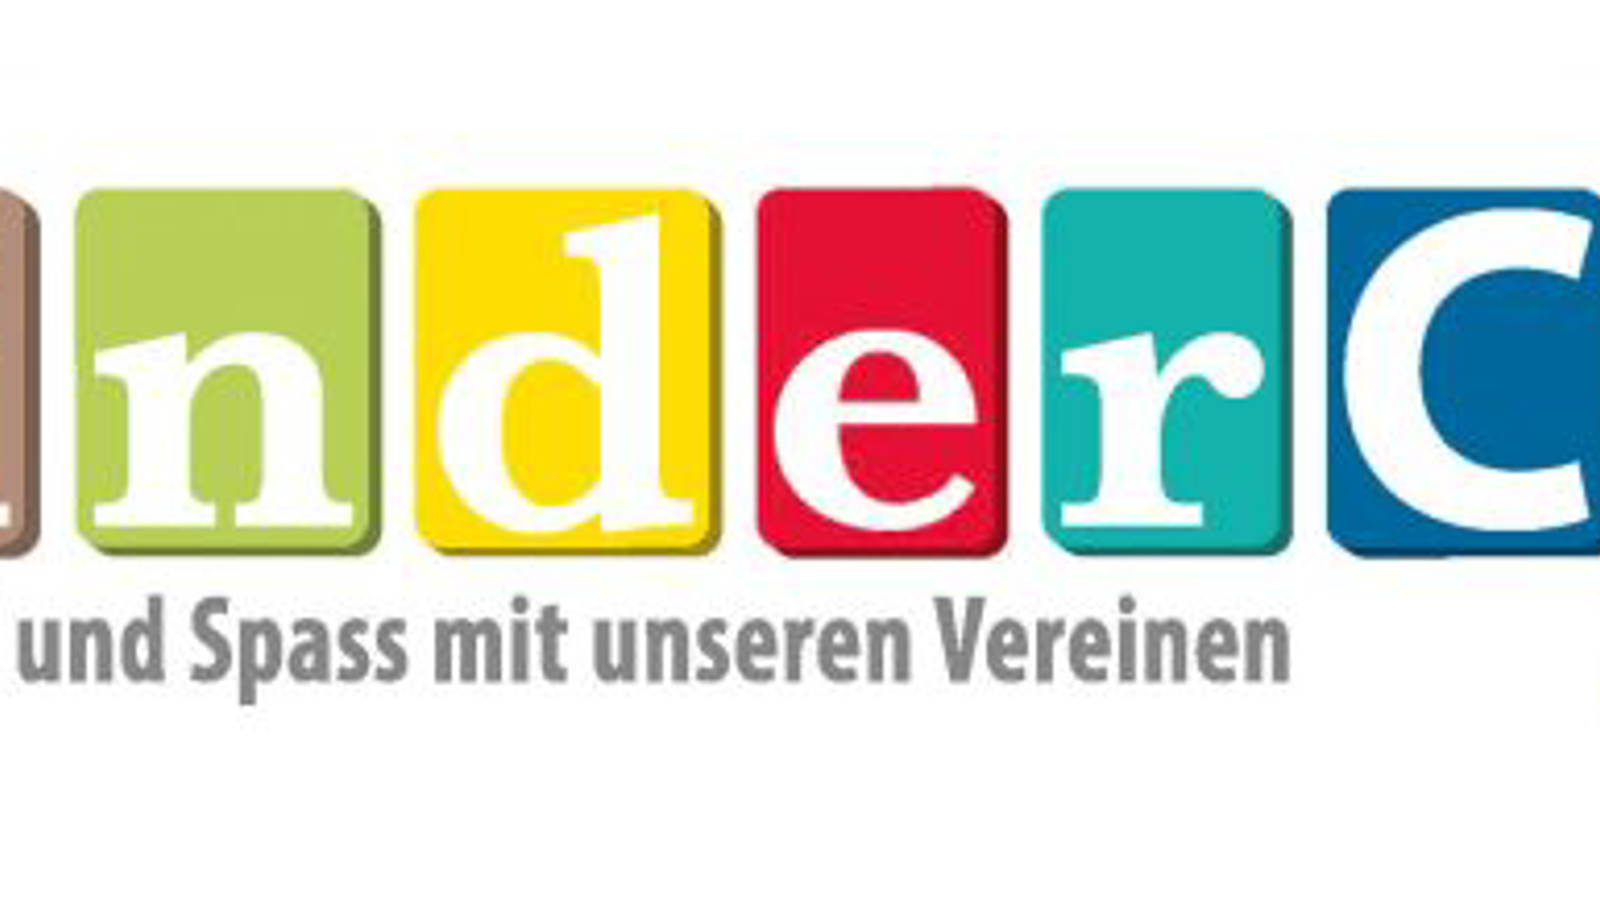 Logo Kindercamp Weiss JPEG 1024X217